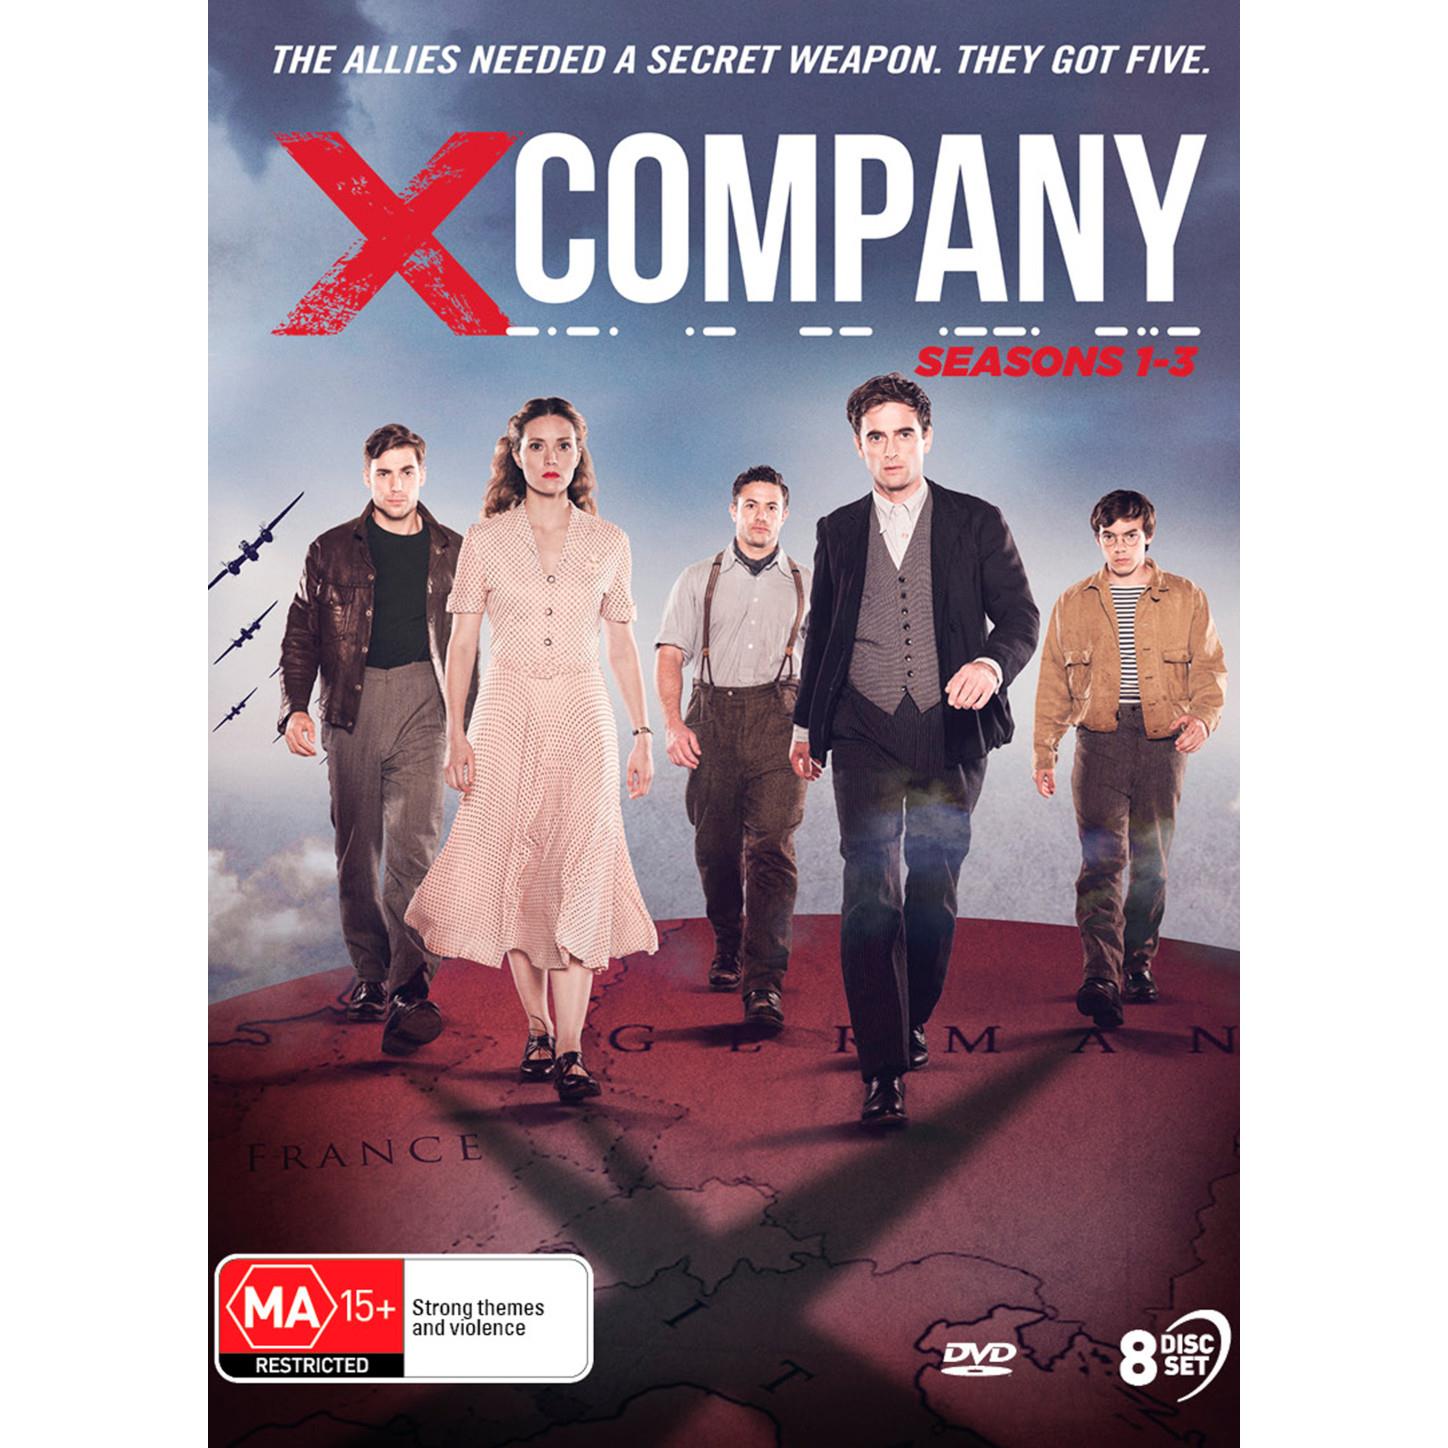 x company: seasons 1-3